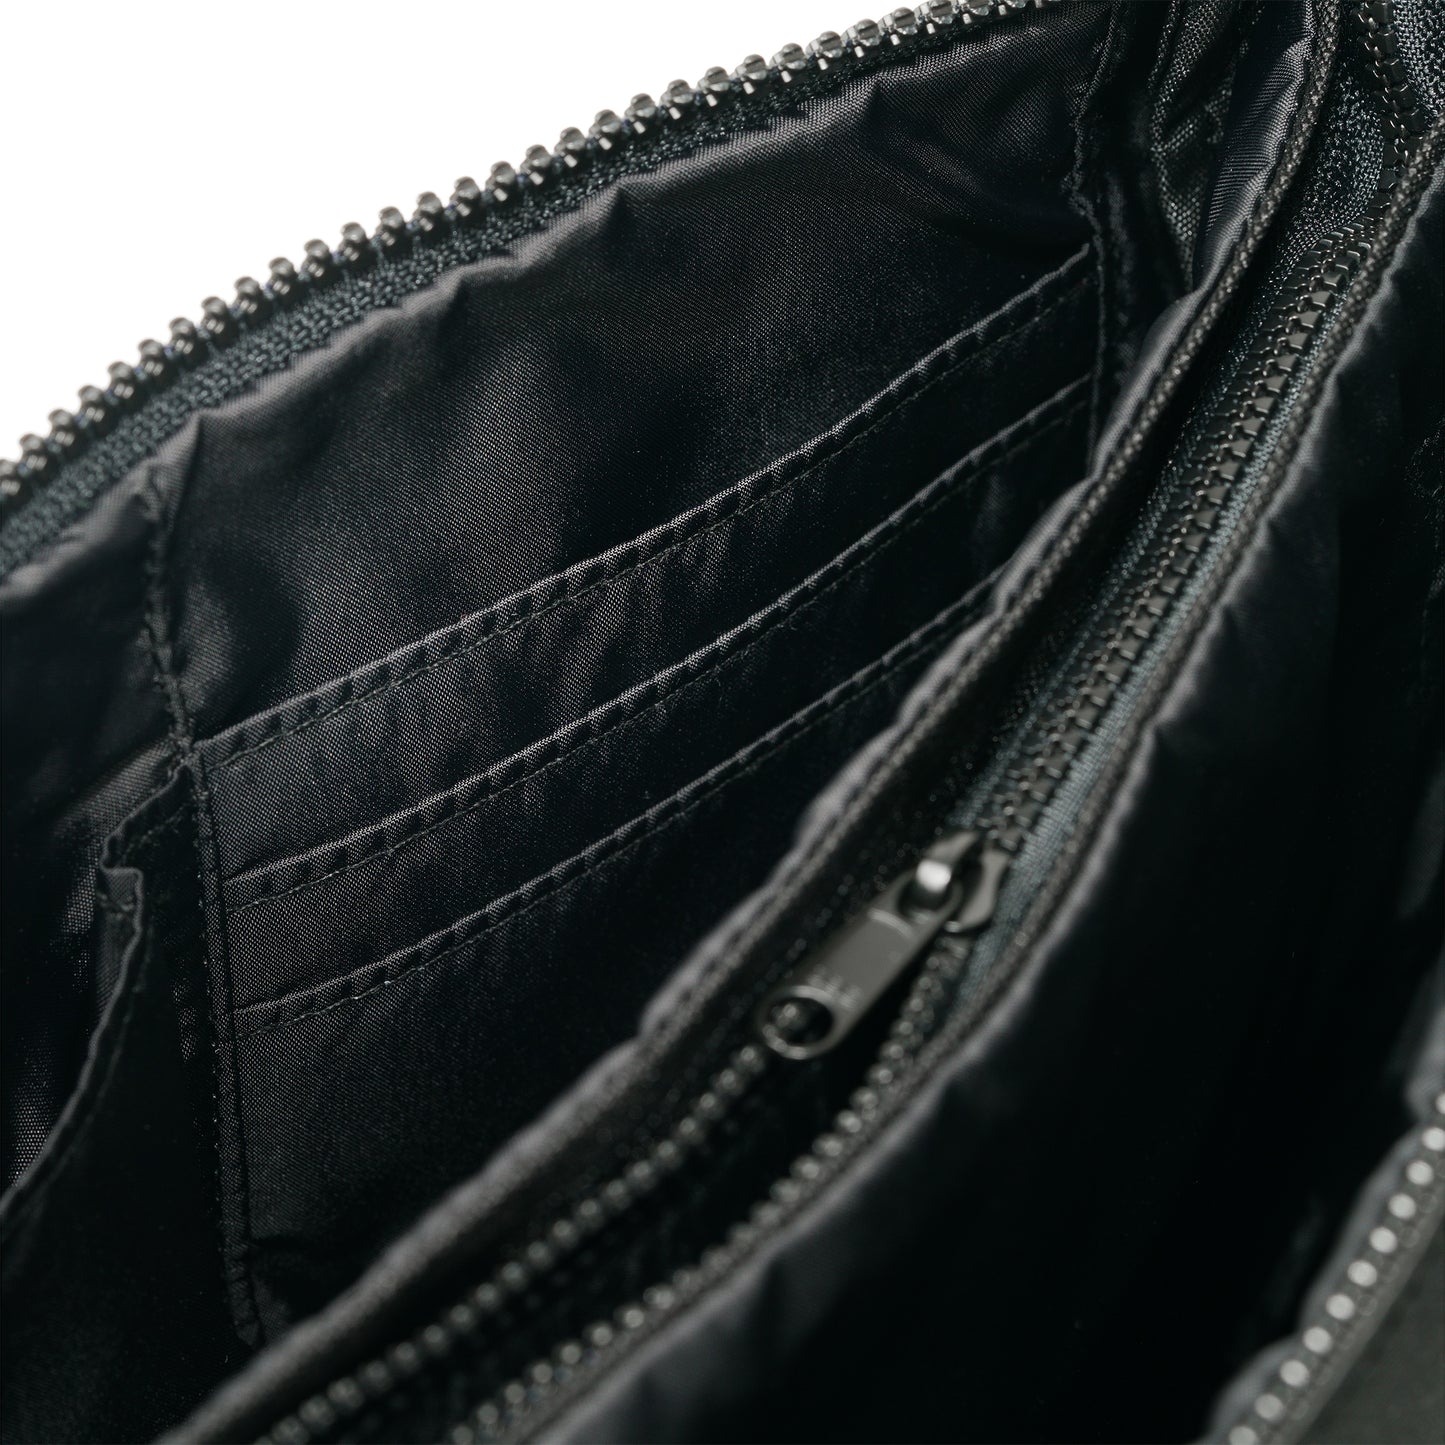 Roka London Carnaby Crossbody Bag, All Black (Sustainable Canvas)